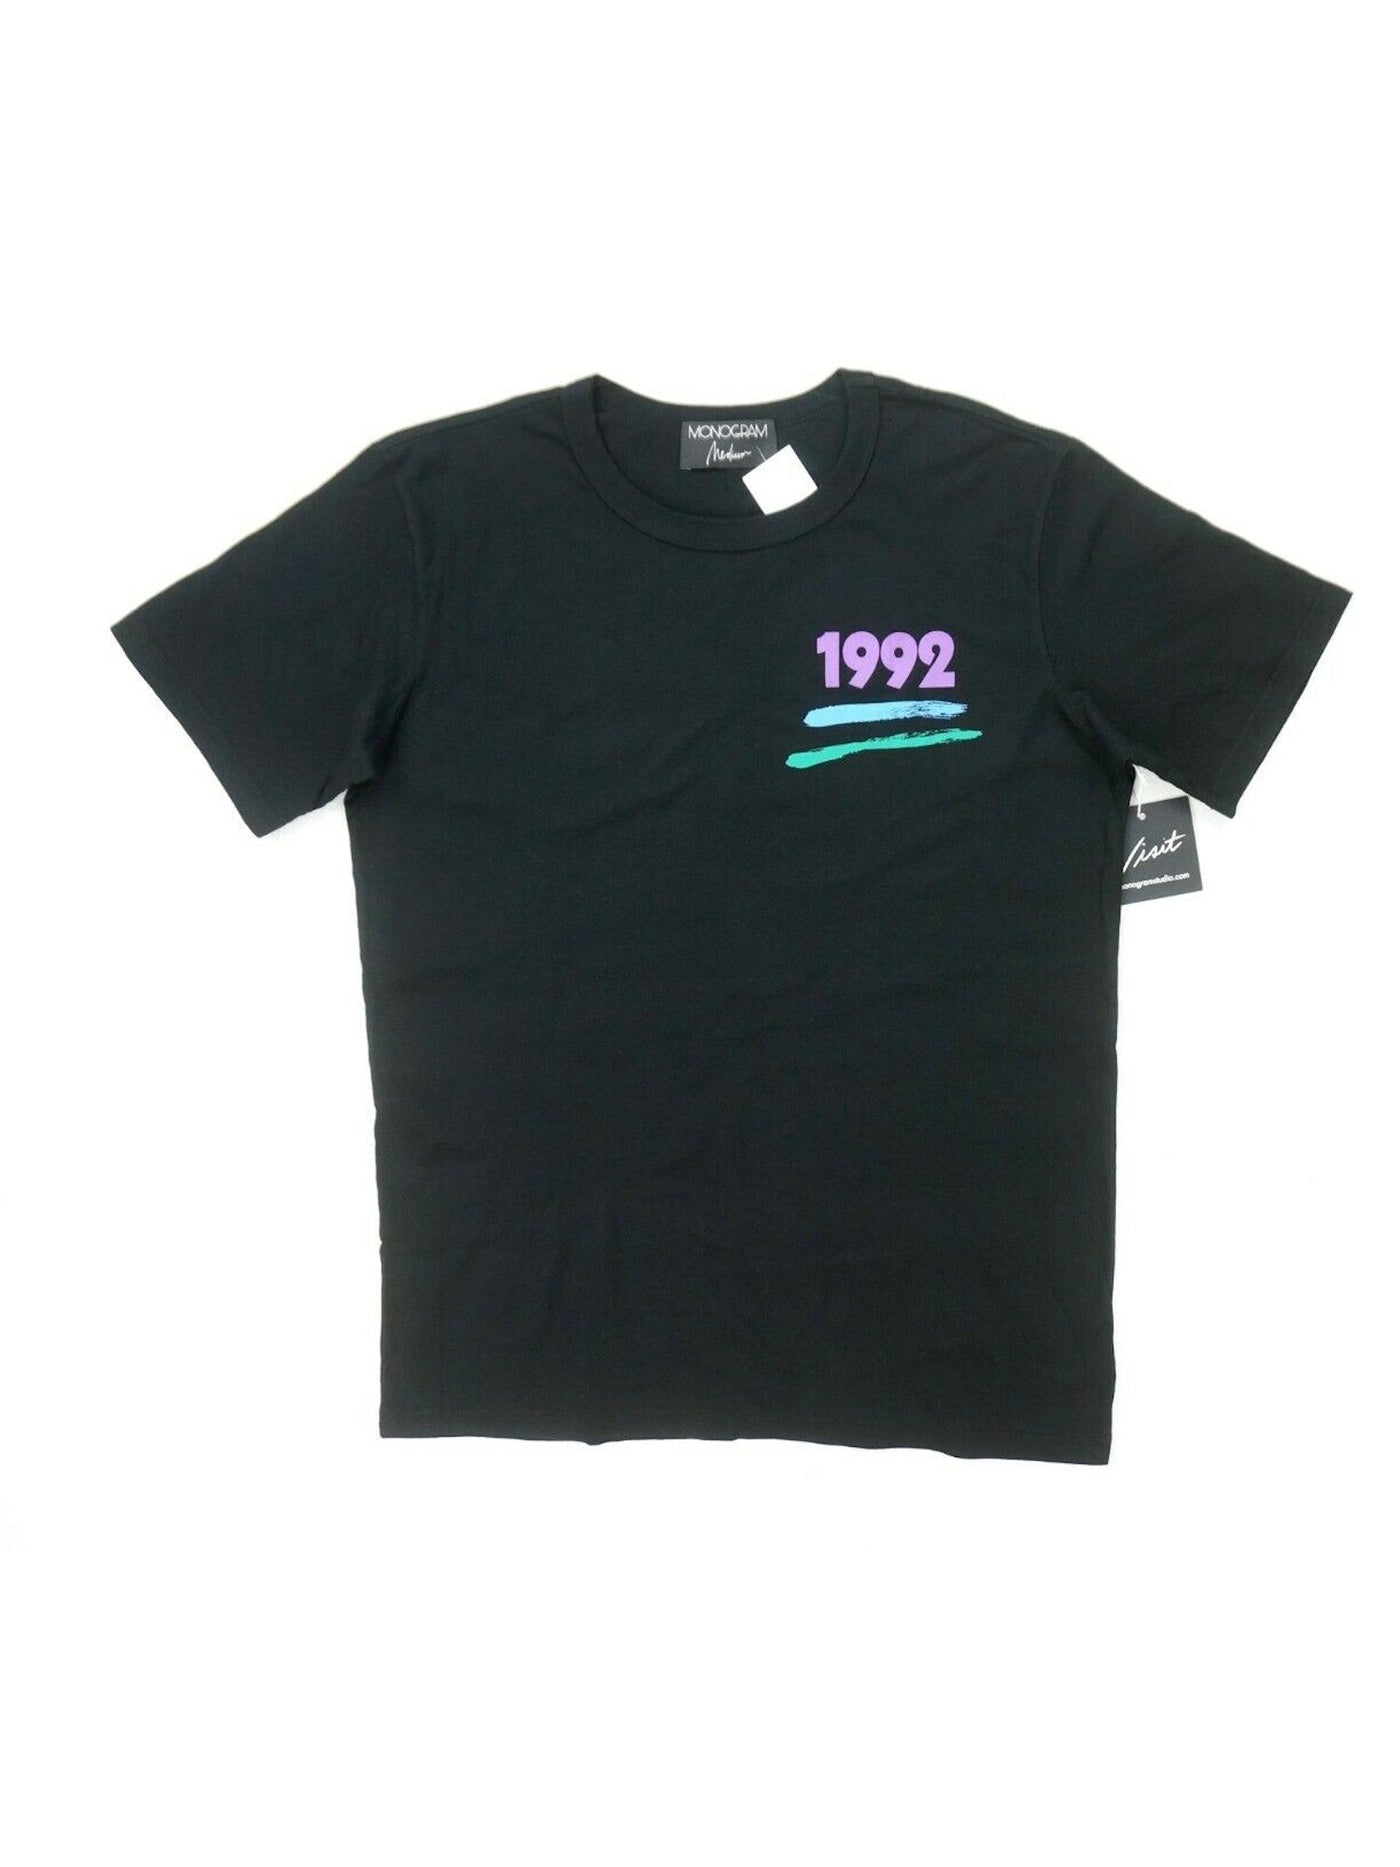 MONOGRAM Mens Black Lightweight, Graphic Classic Fit T-Shirt M